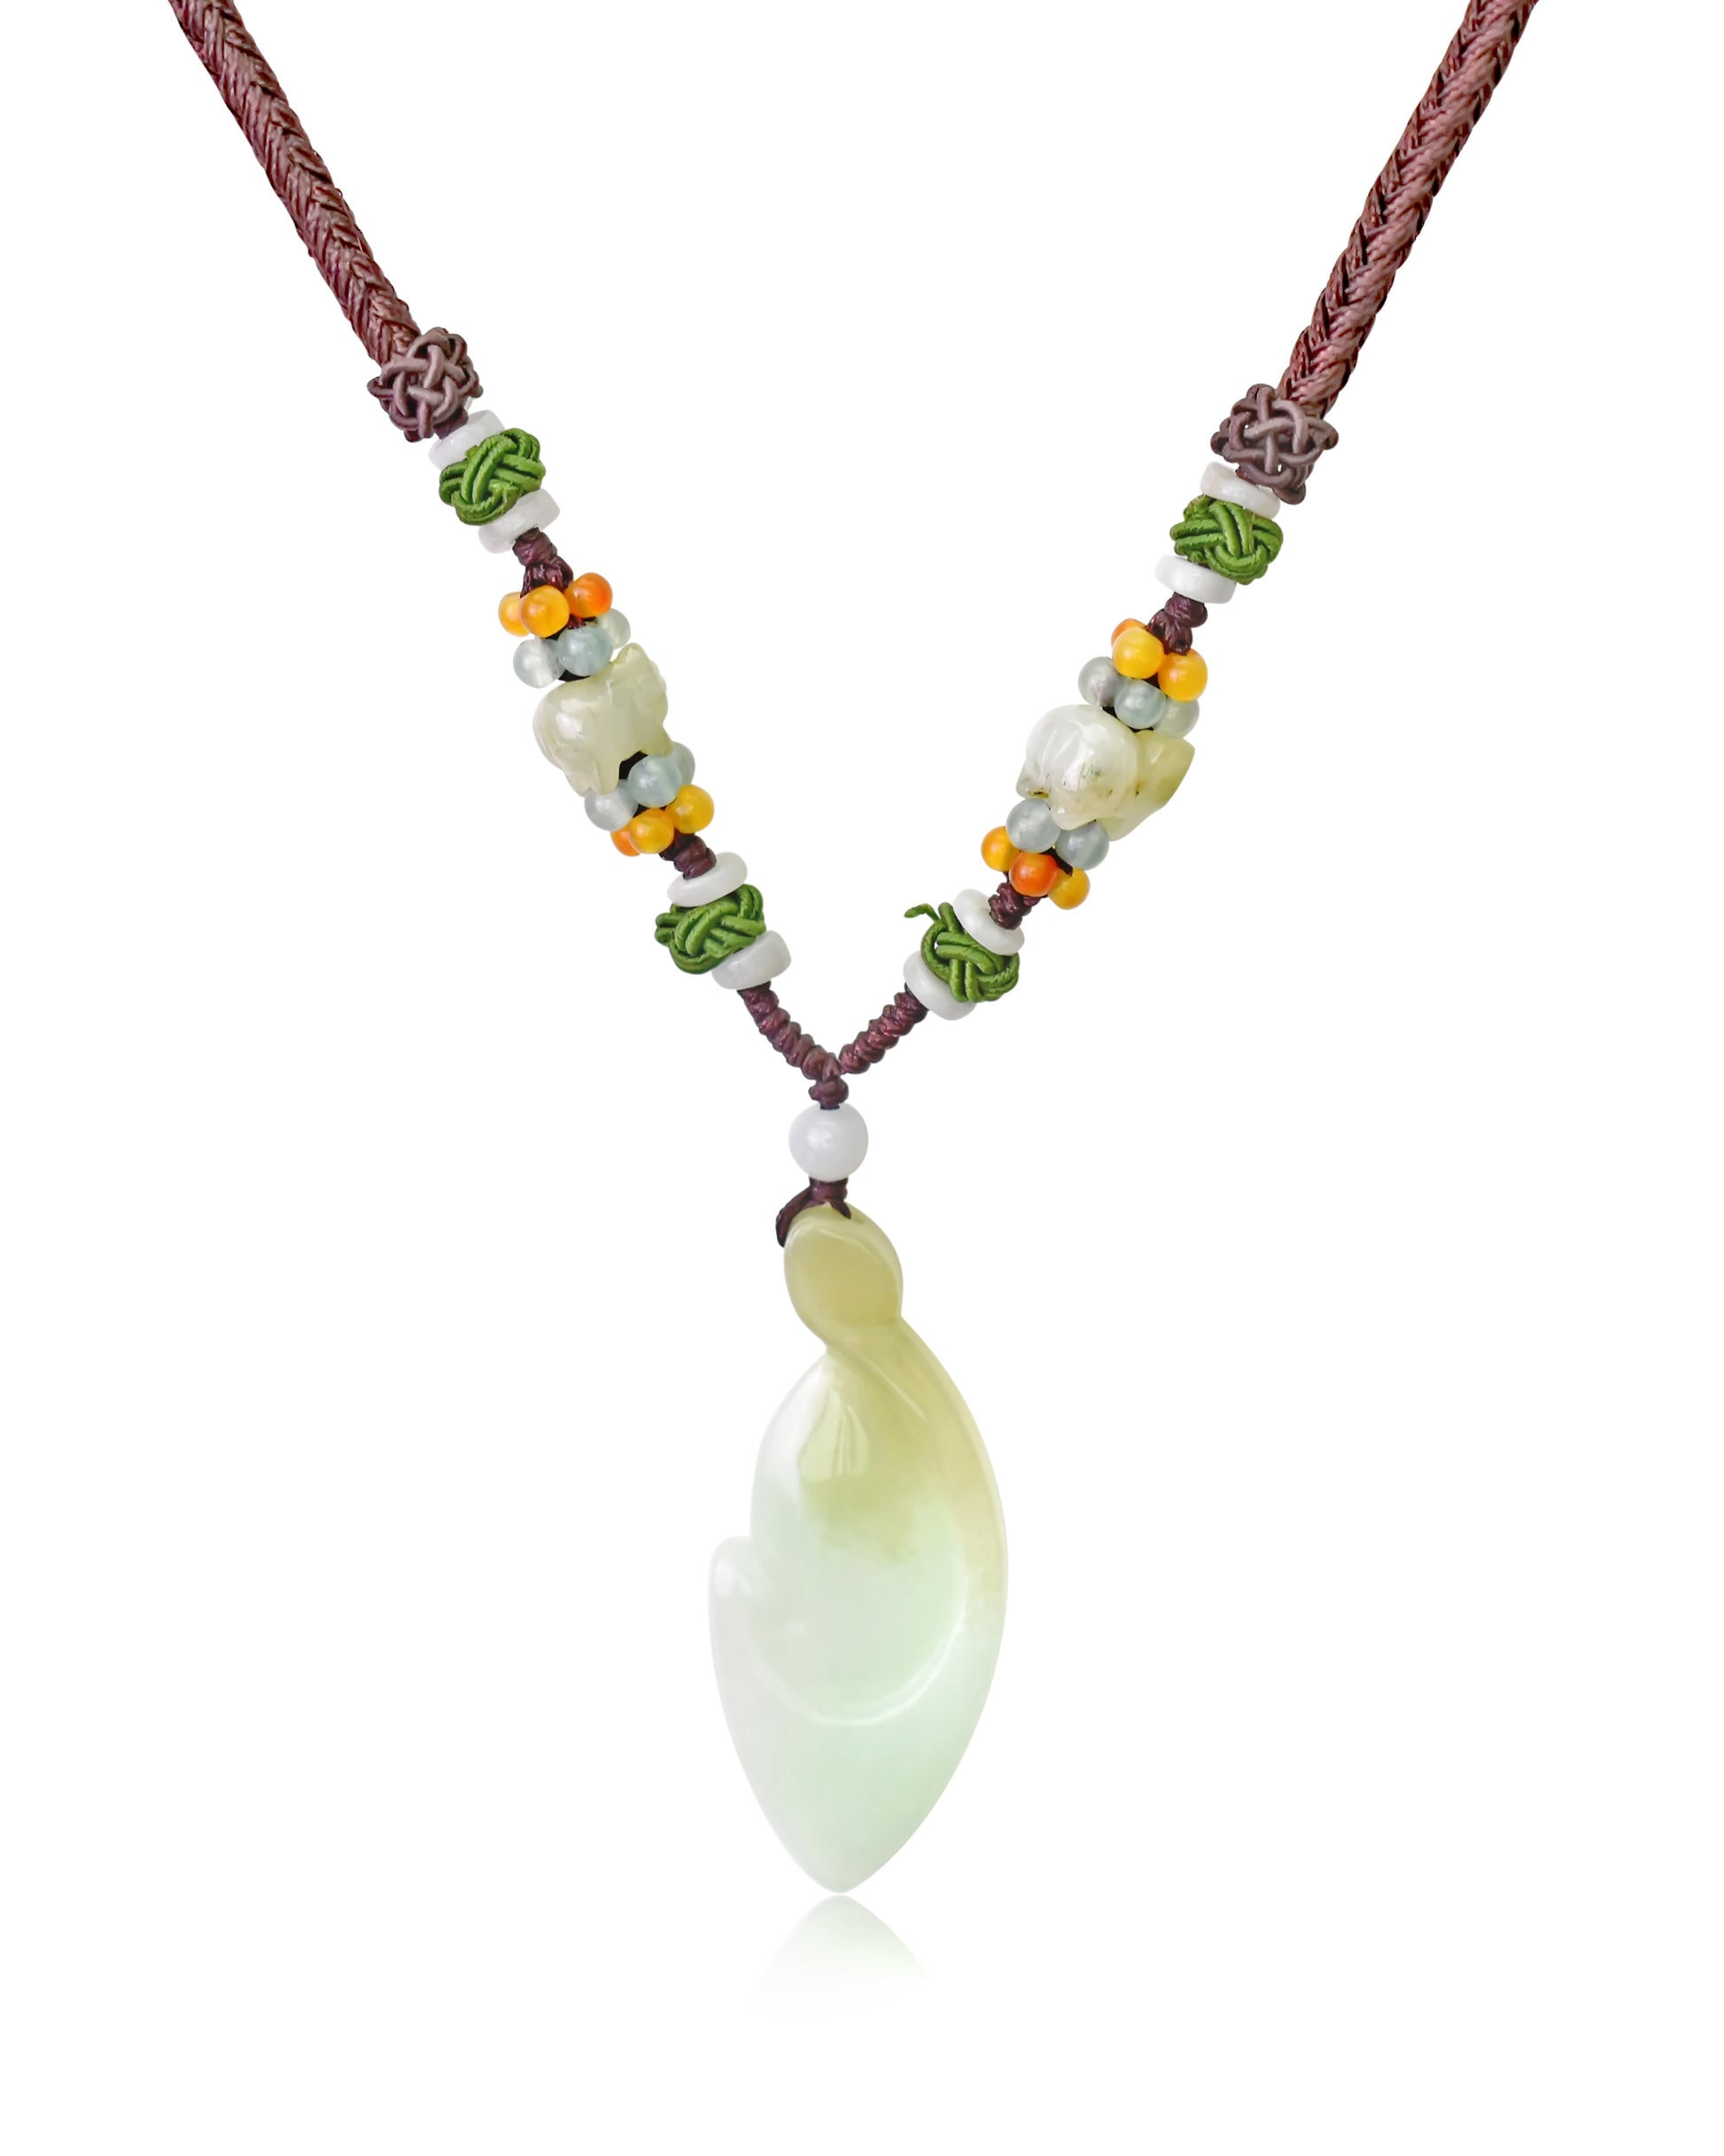 Handmade and Unique: The Clover Shape Jade Necklace